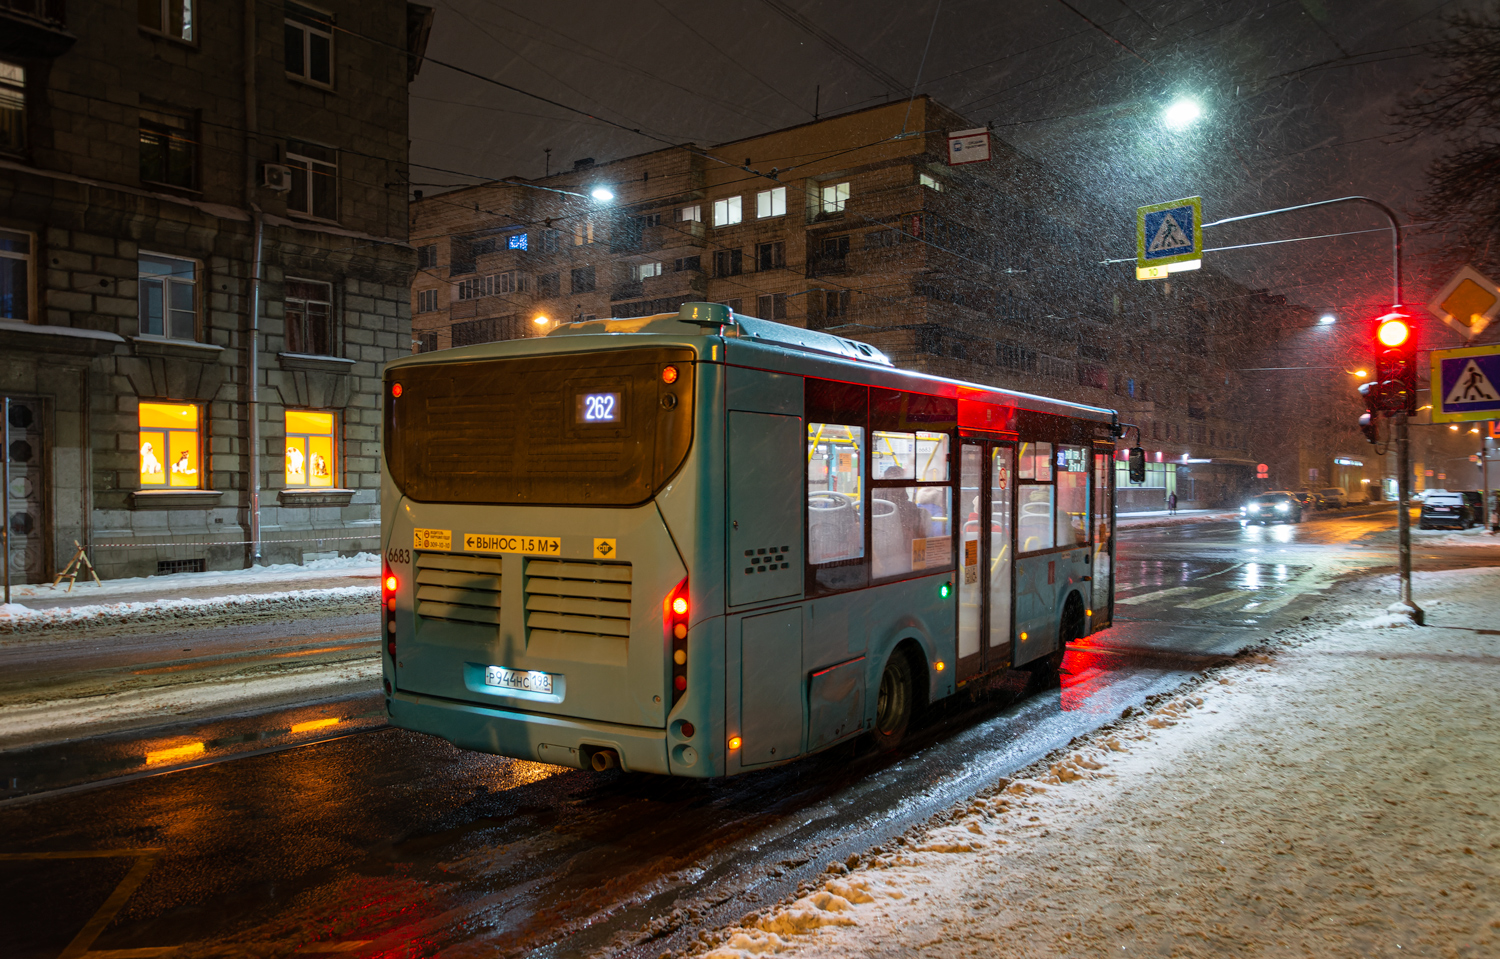 Санкт-Петербург, Volgabus-4298.G4 (LNG) № 6683